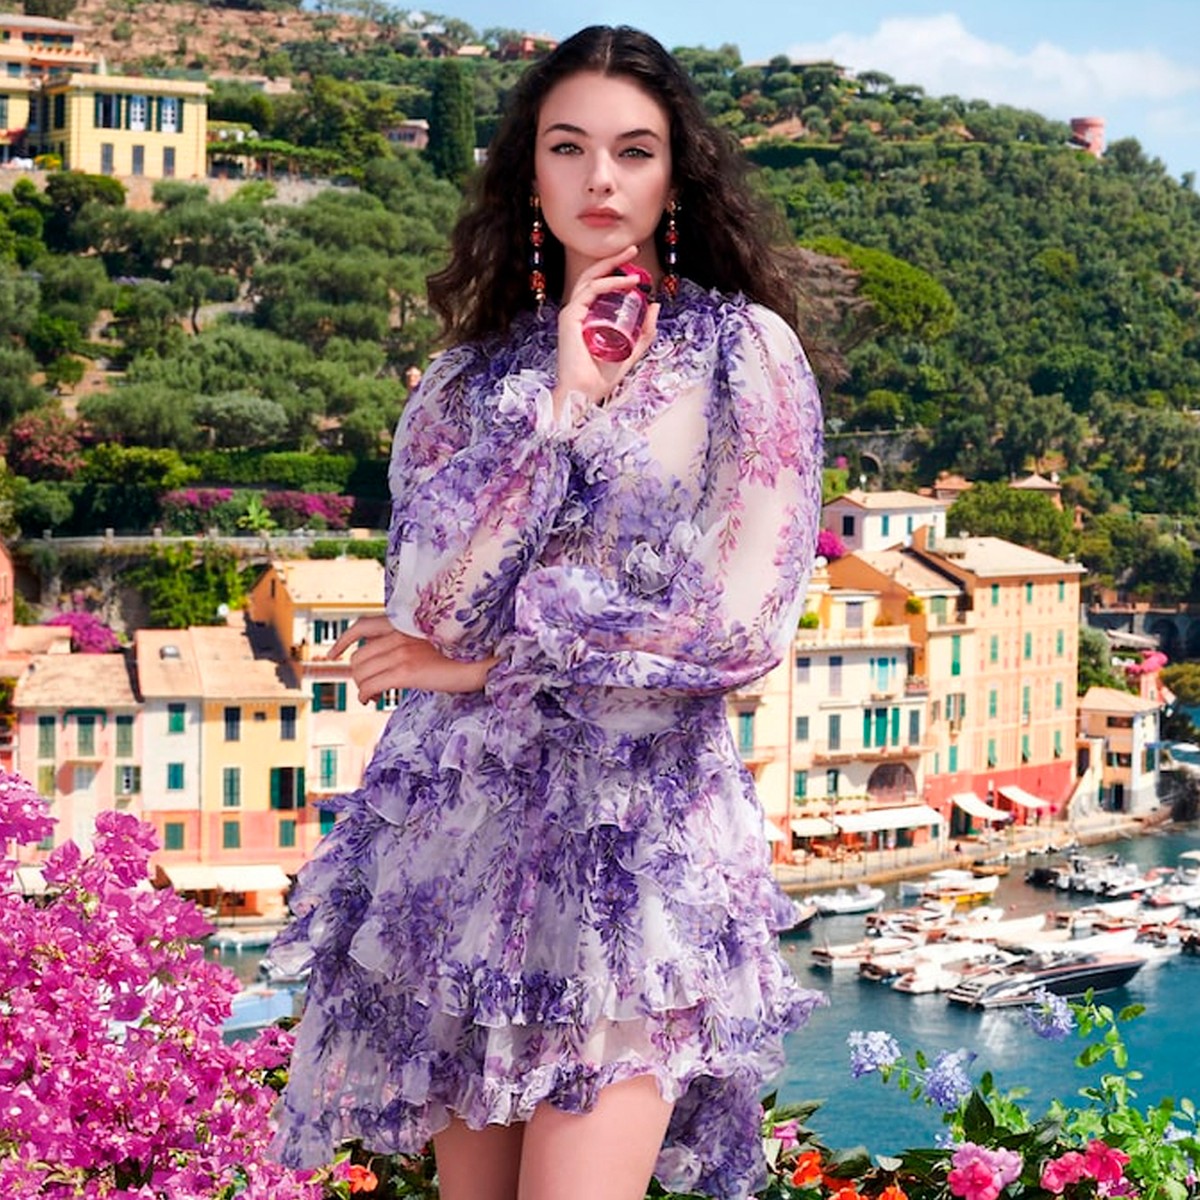 Dolce Lily Dolce & Gabbana Perfume Feminino Eau de Toilette 75ml - DOLCE  VITA